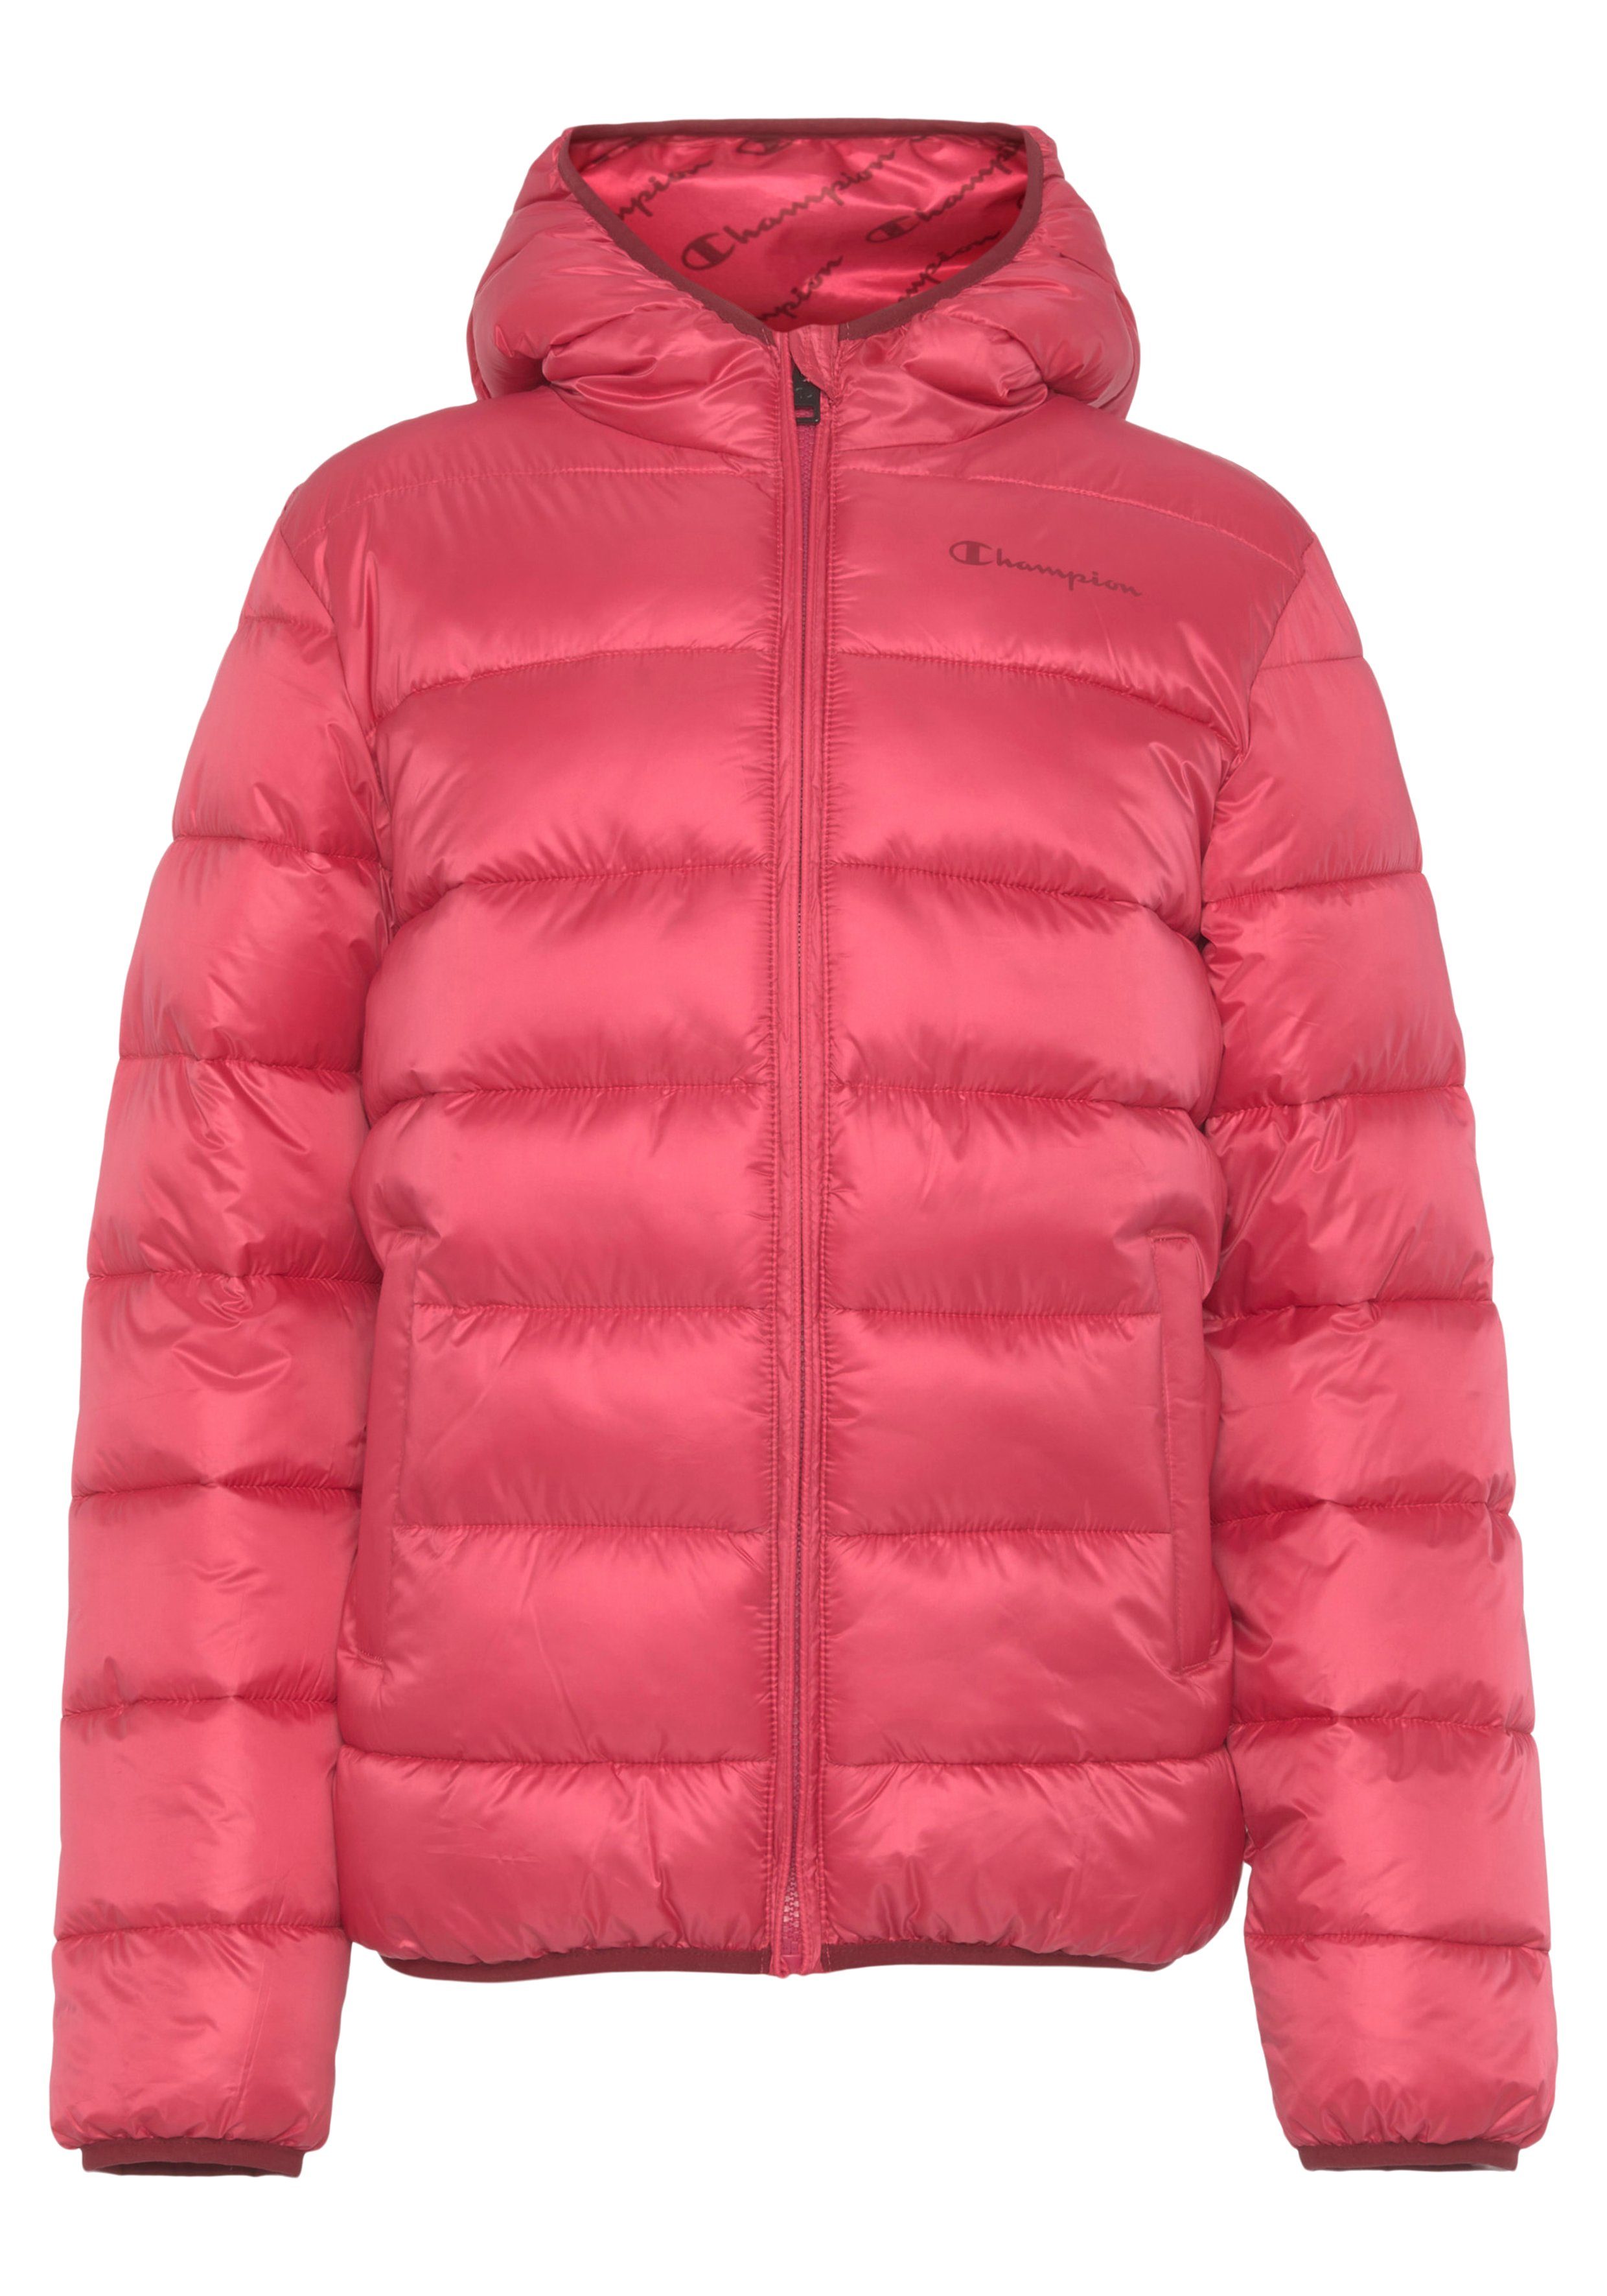 Champion Steppjacke Outdoor Hooded Jacket - für Kinder pink